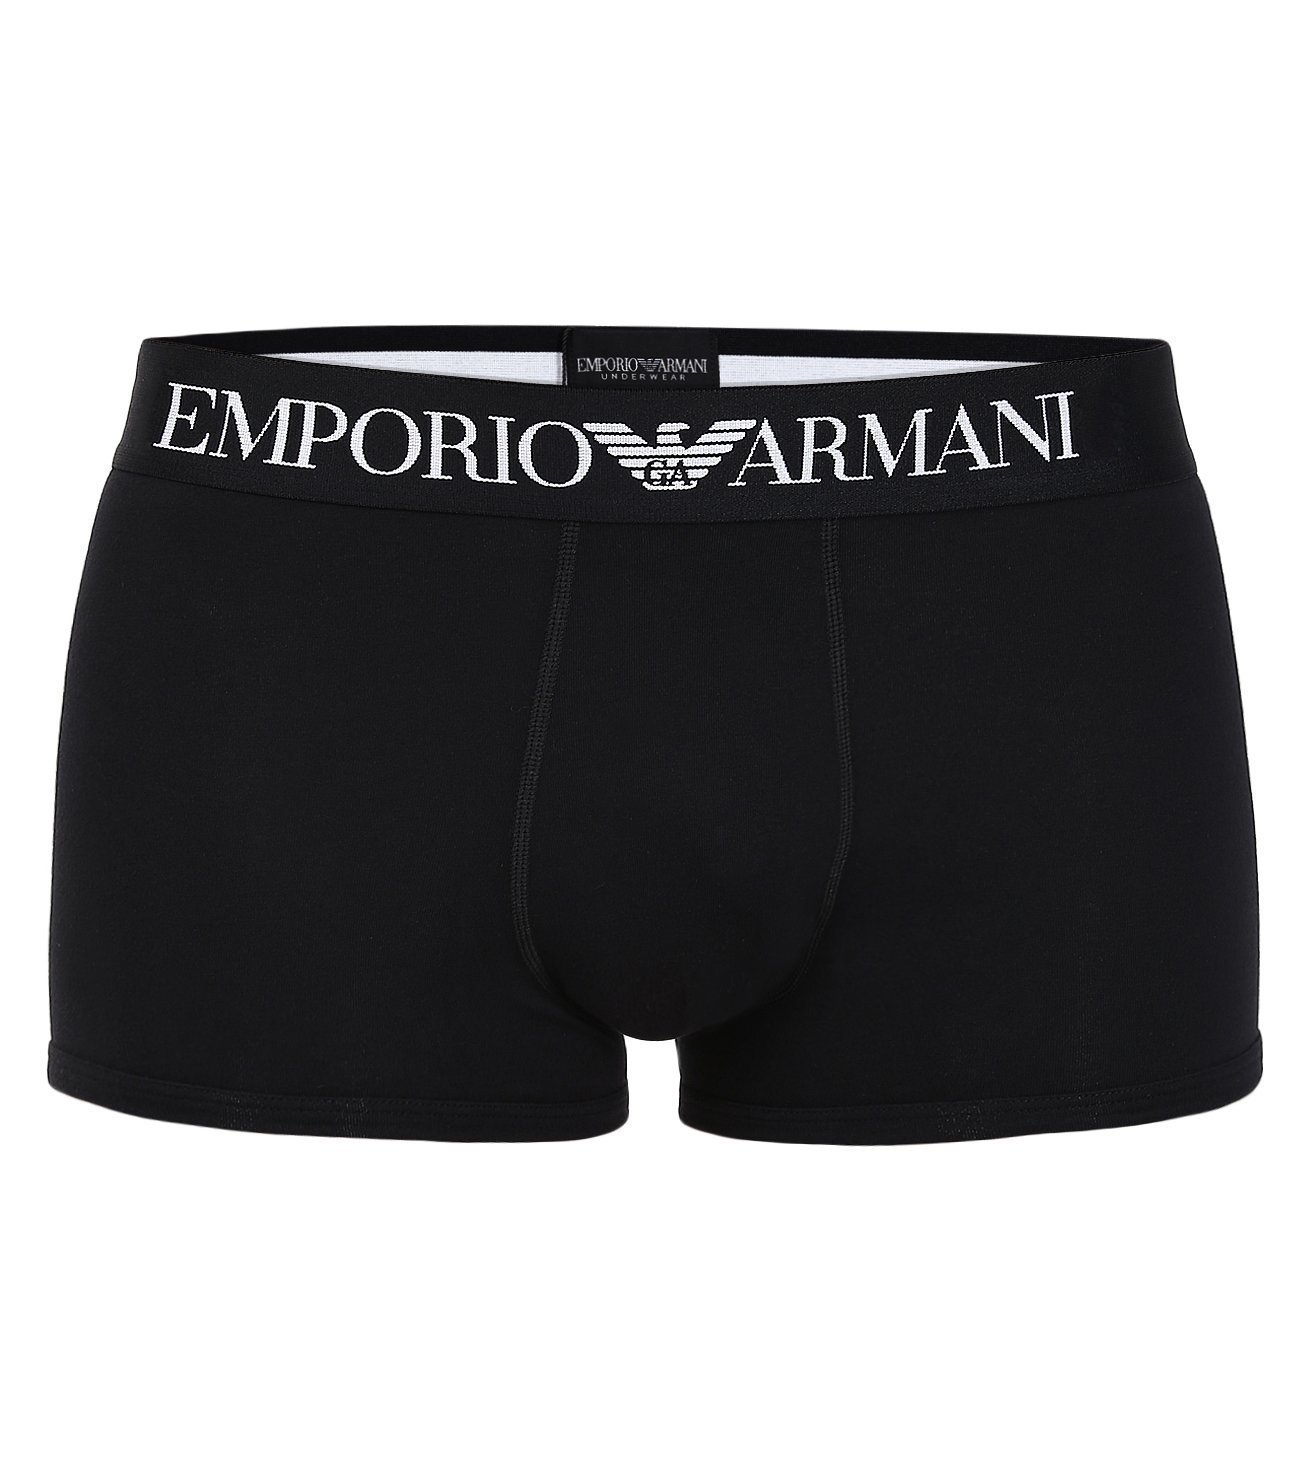 armani underwear price